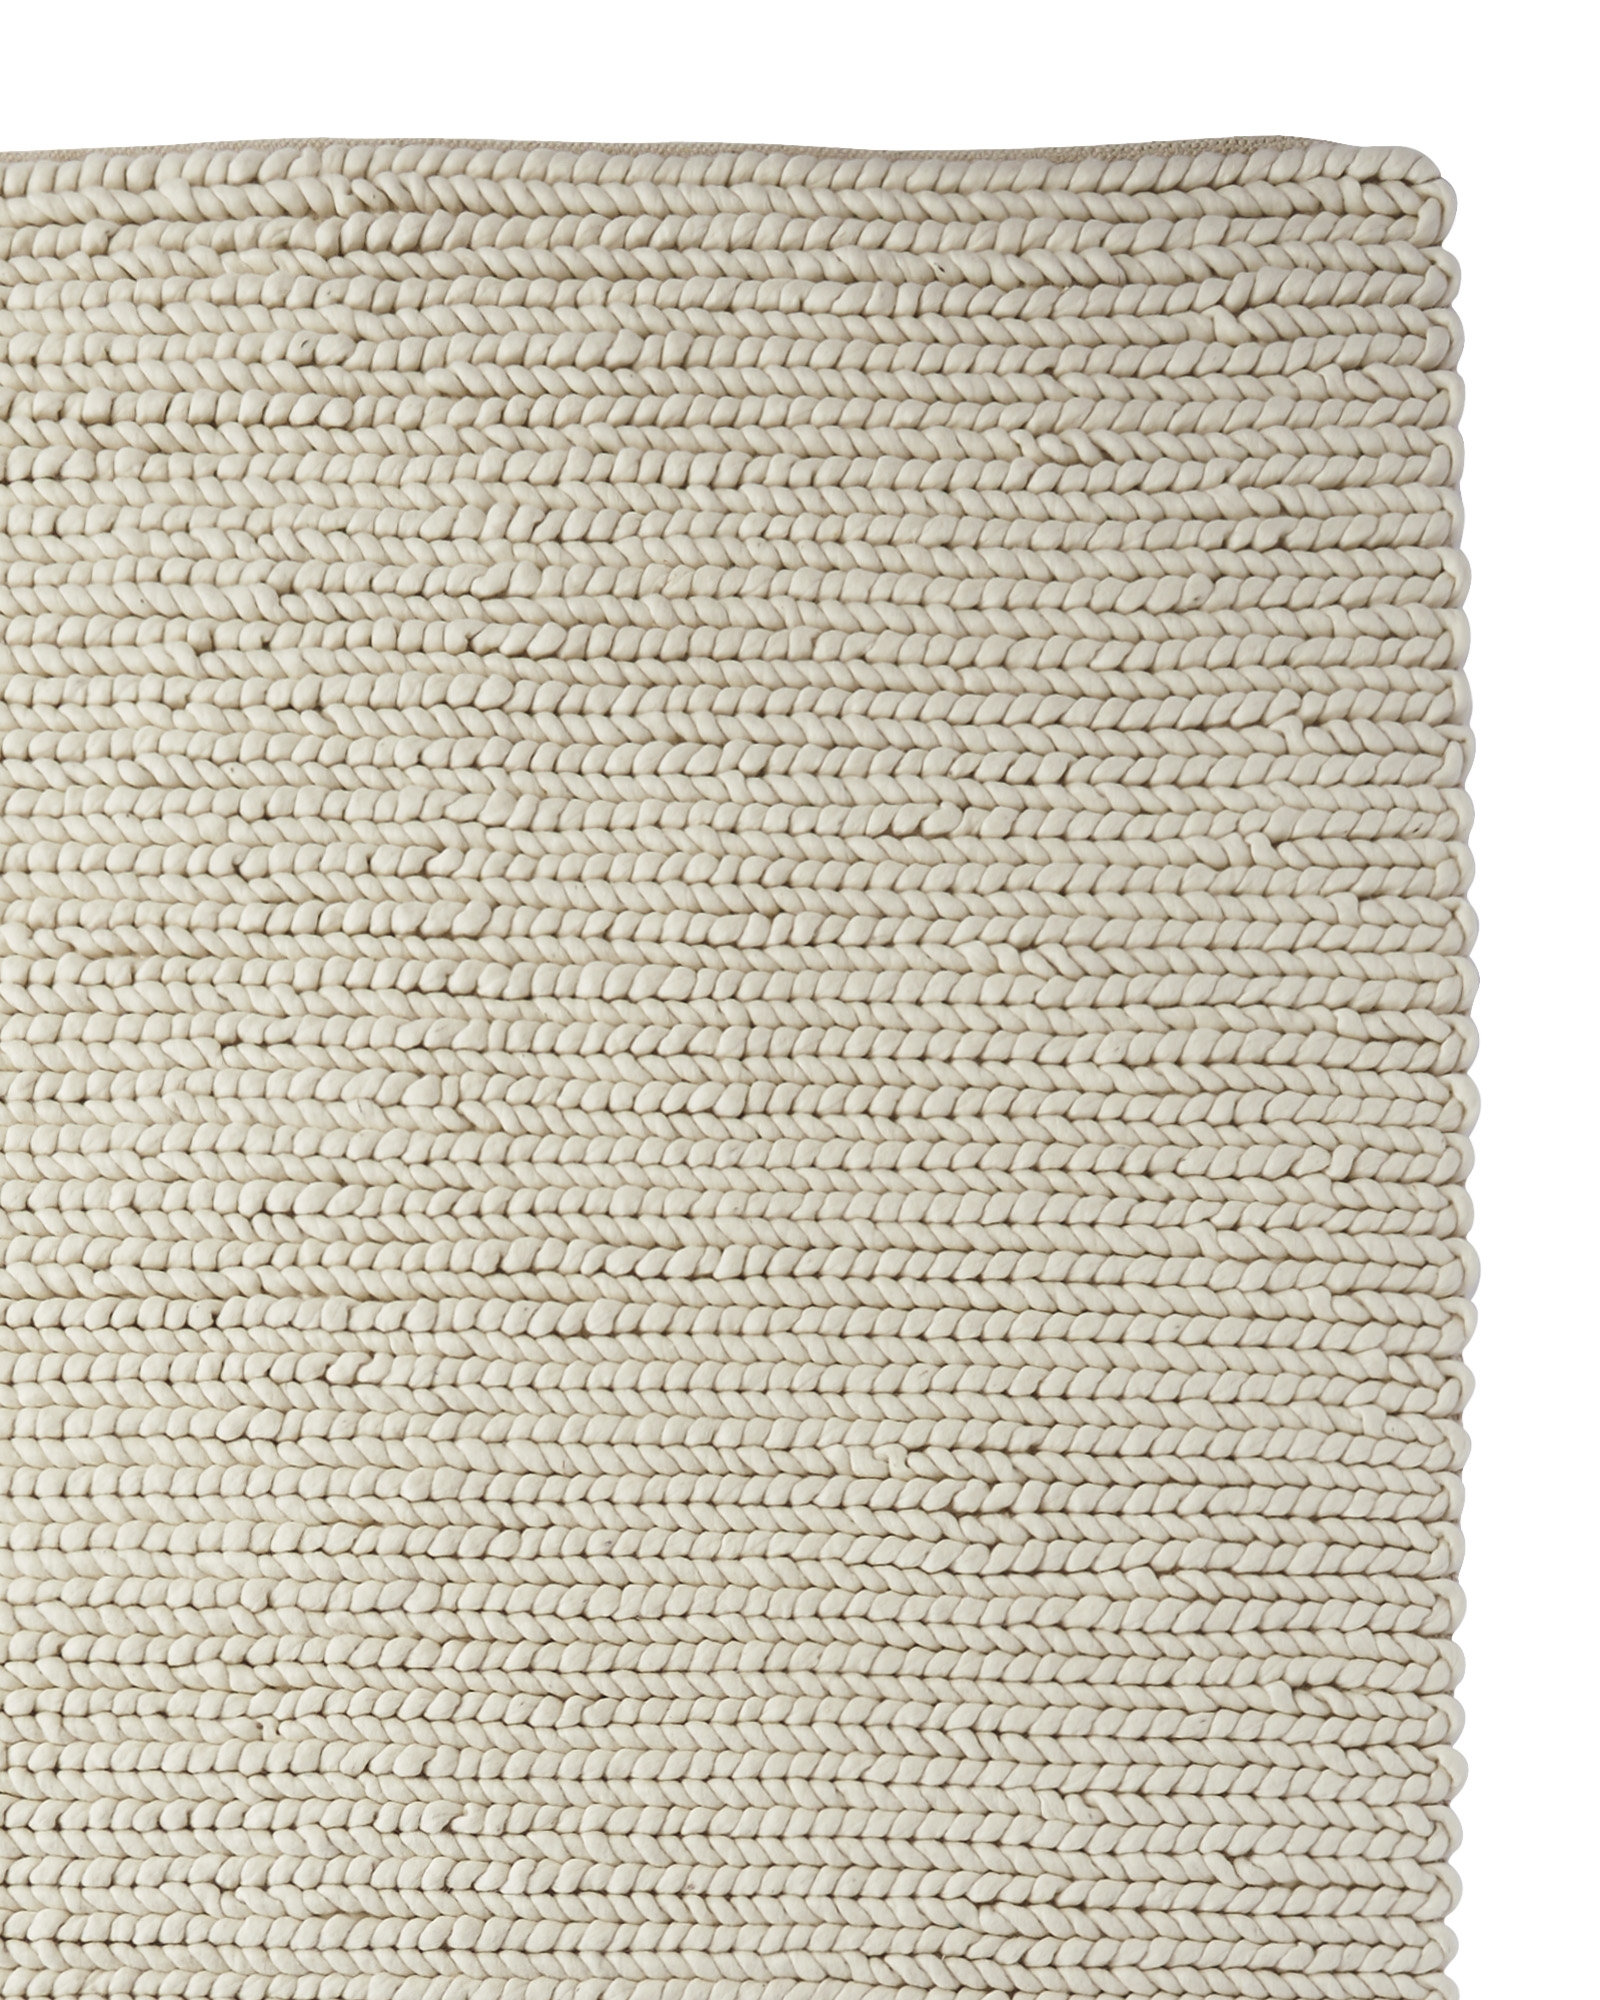 Braided Wool Rug - Ivory - 9' x 12' - Image 1